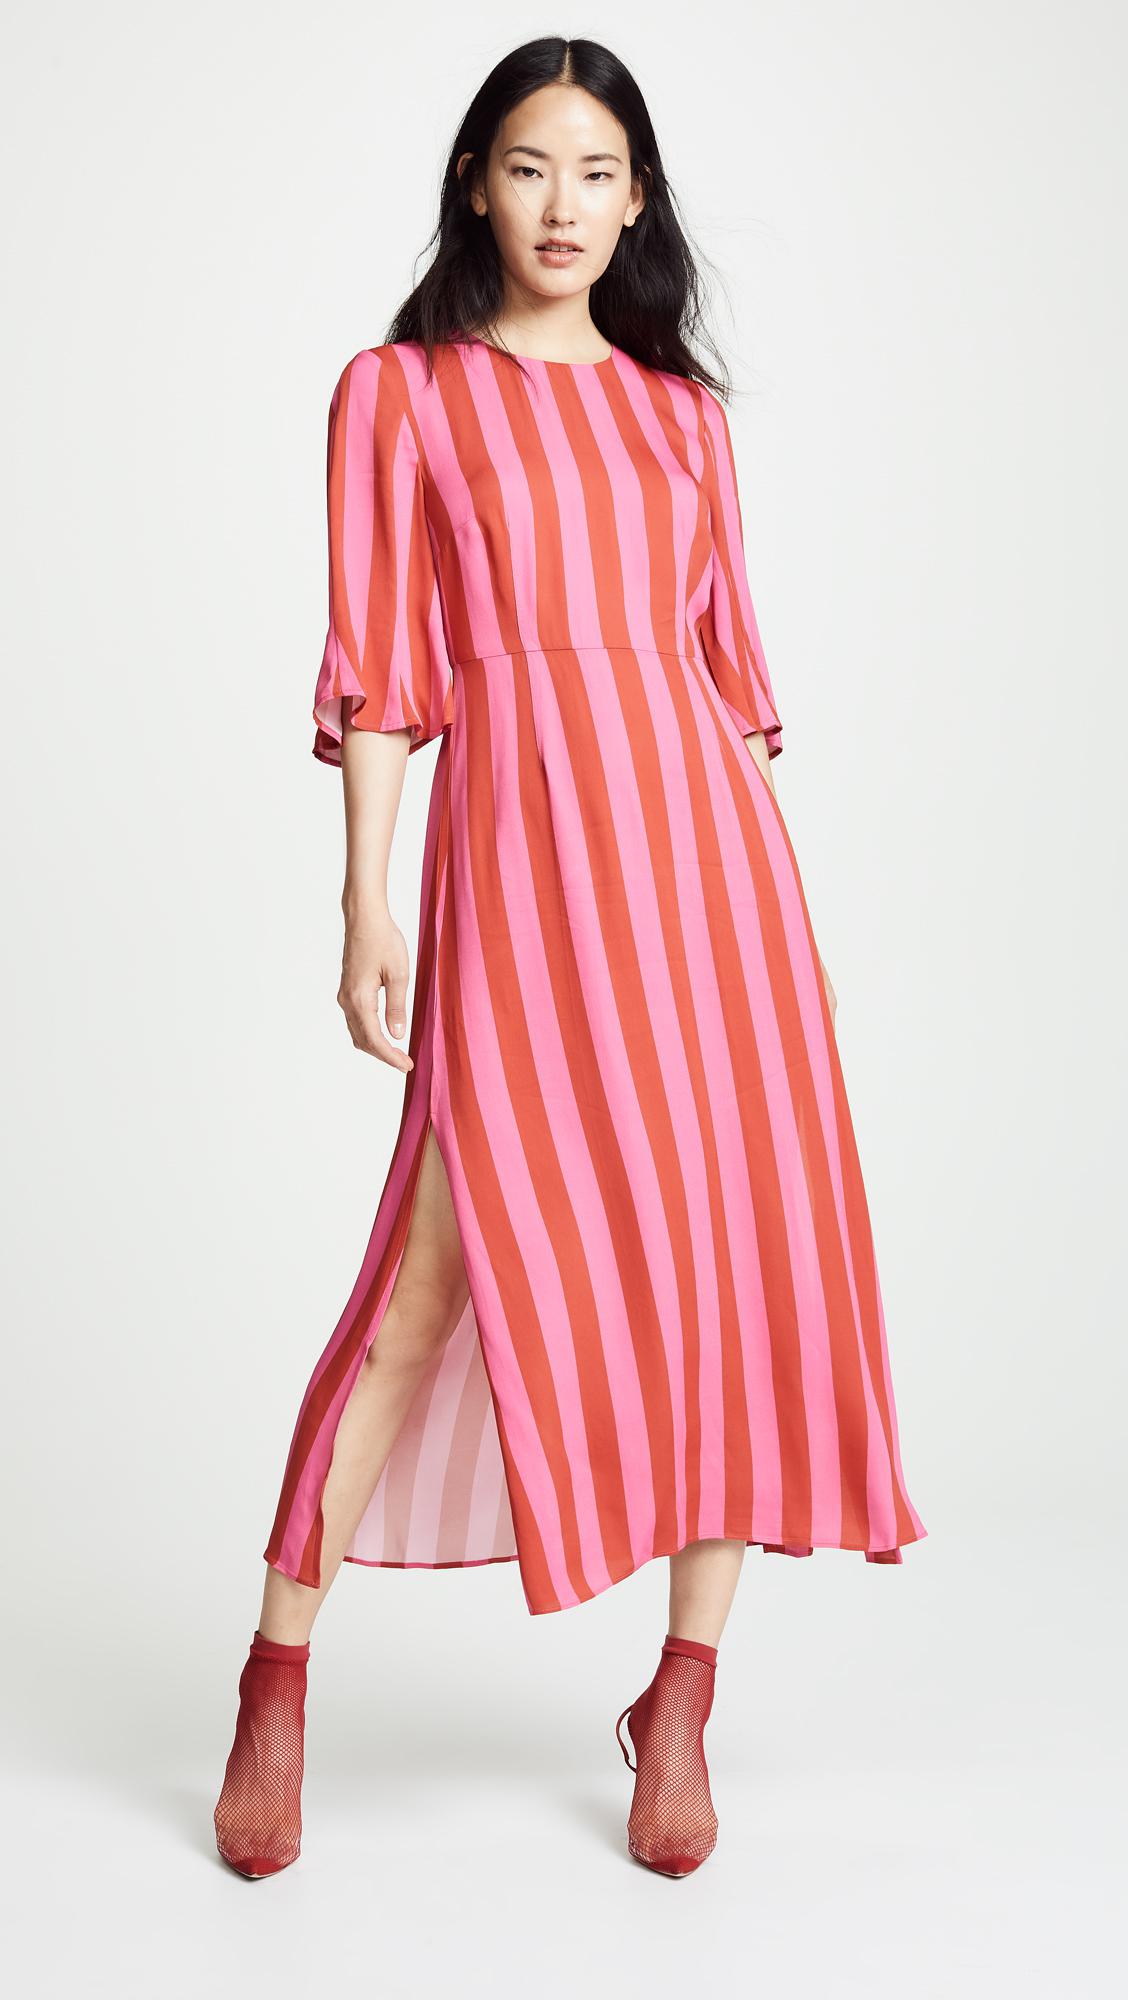 Stine Goya Synthetic Kirsten Dress in Stripes Raspberry (Pink) - Lyst